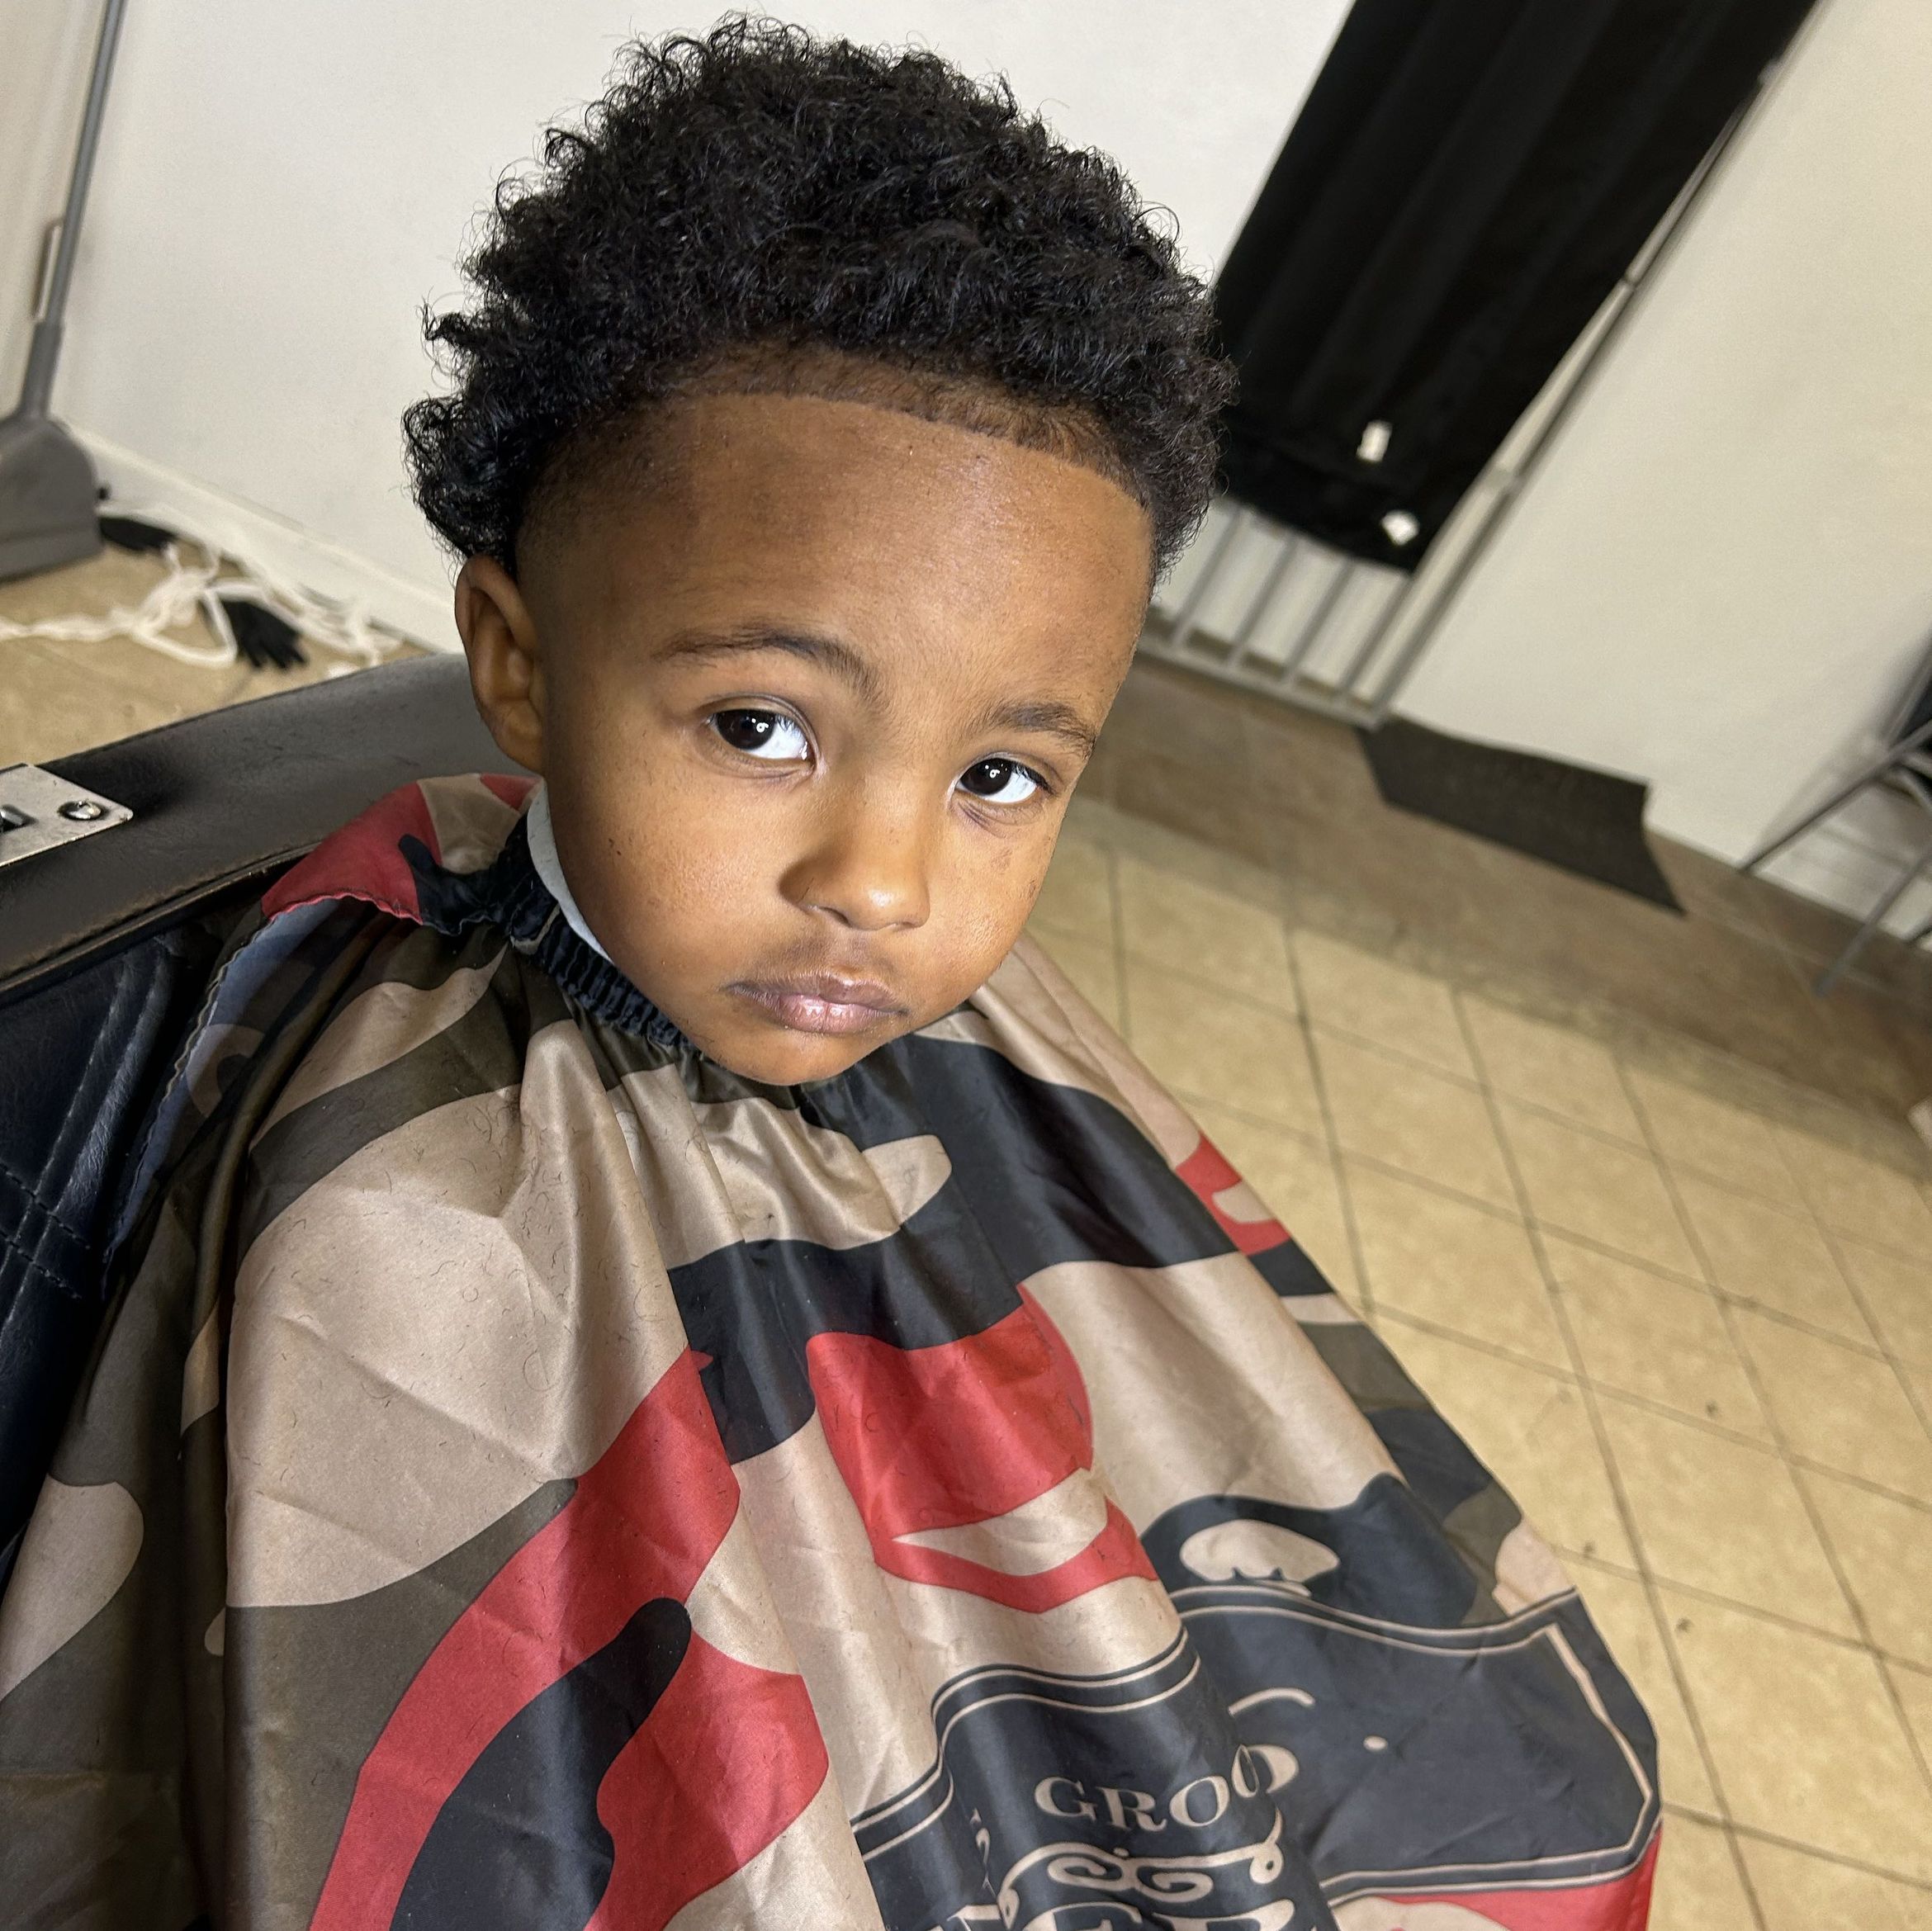 Kids haircut (after 6pm $40) portfolio